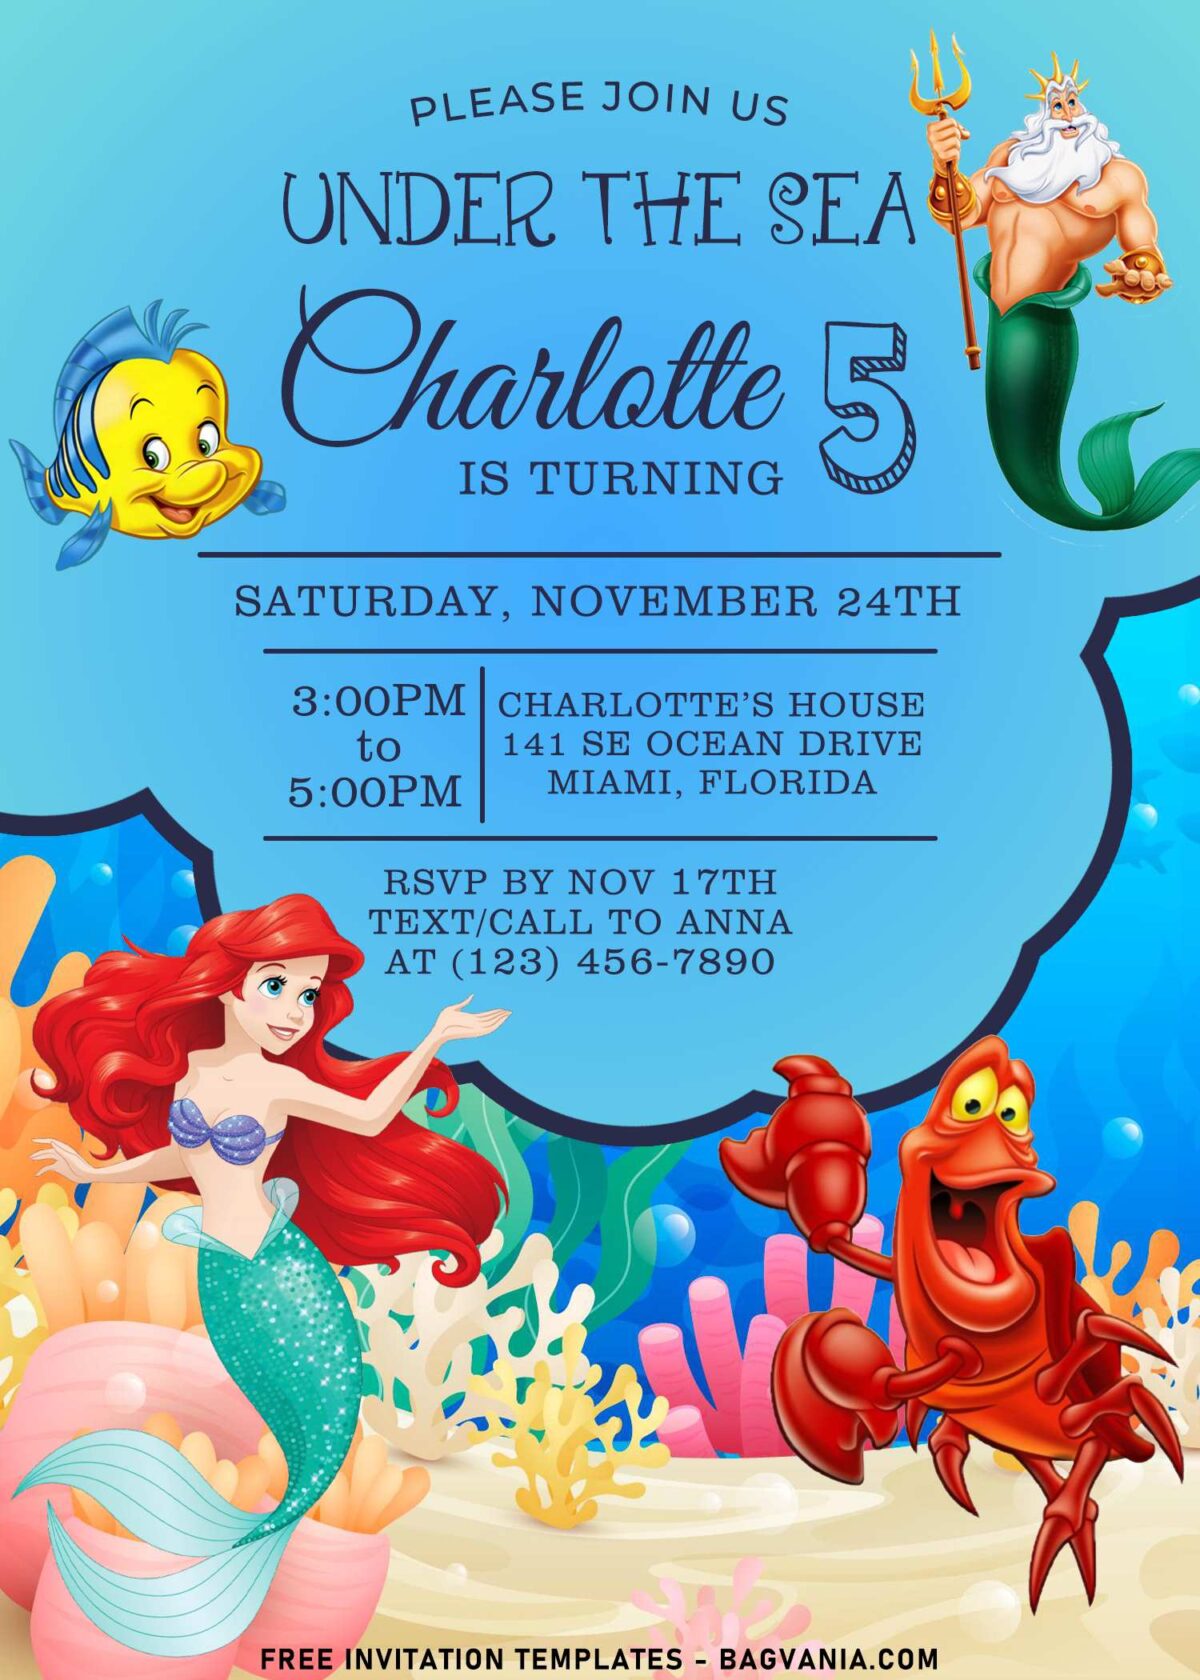 8+ Adorable Princess Ariel Invitation Templates With Flounder And Sebastian